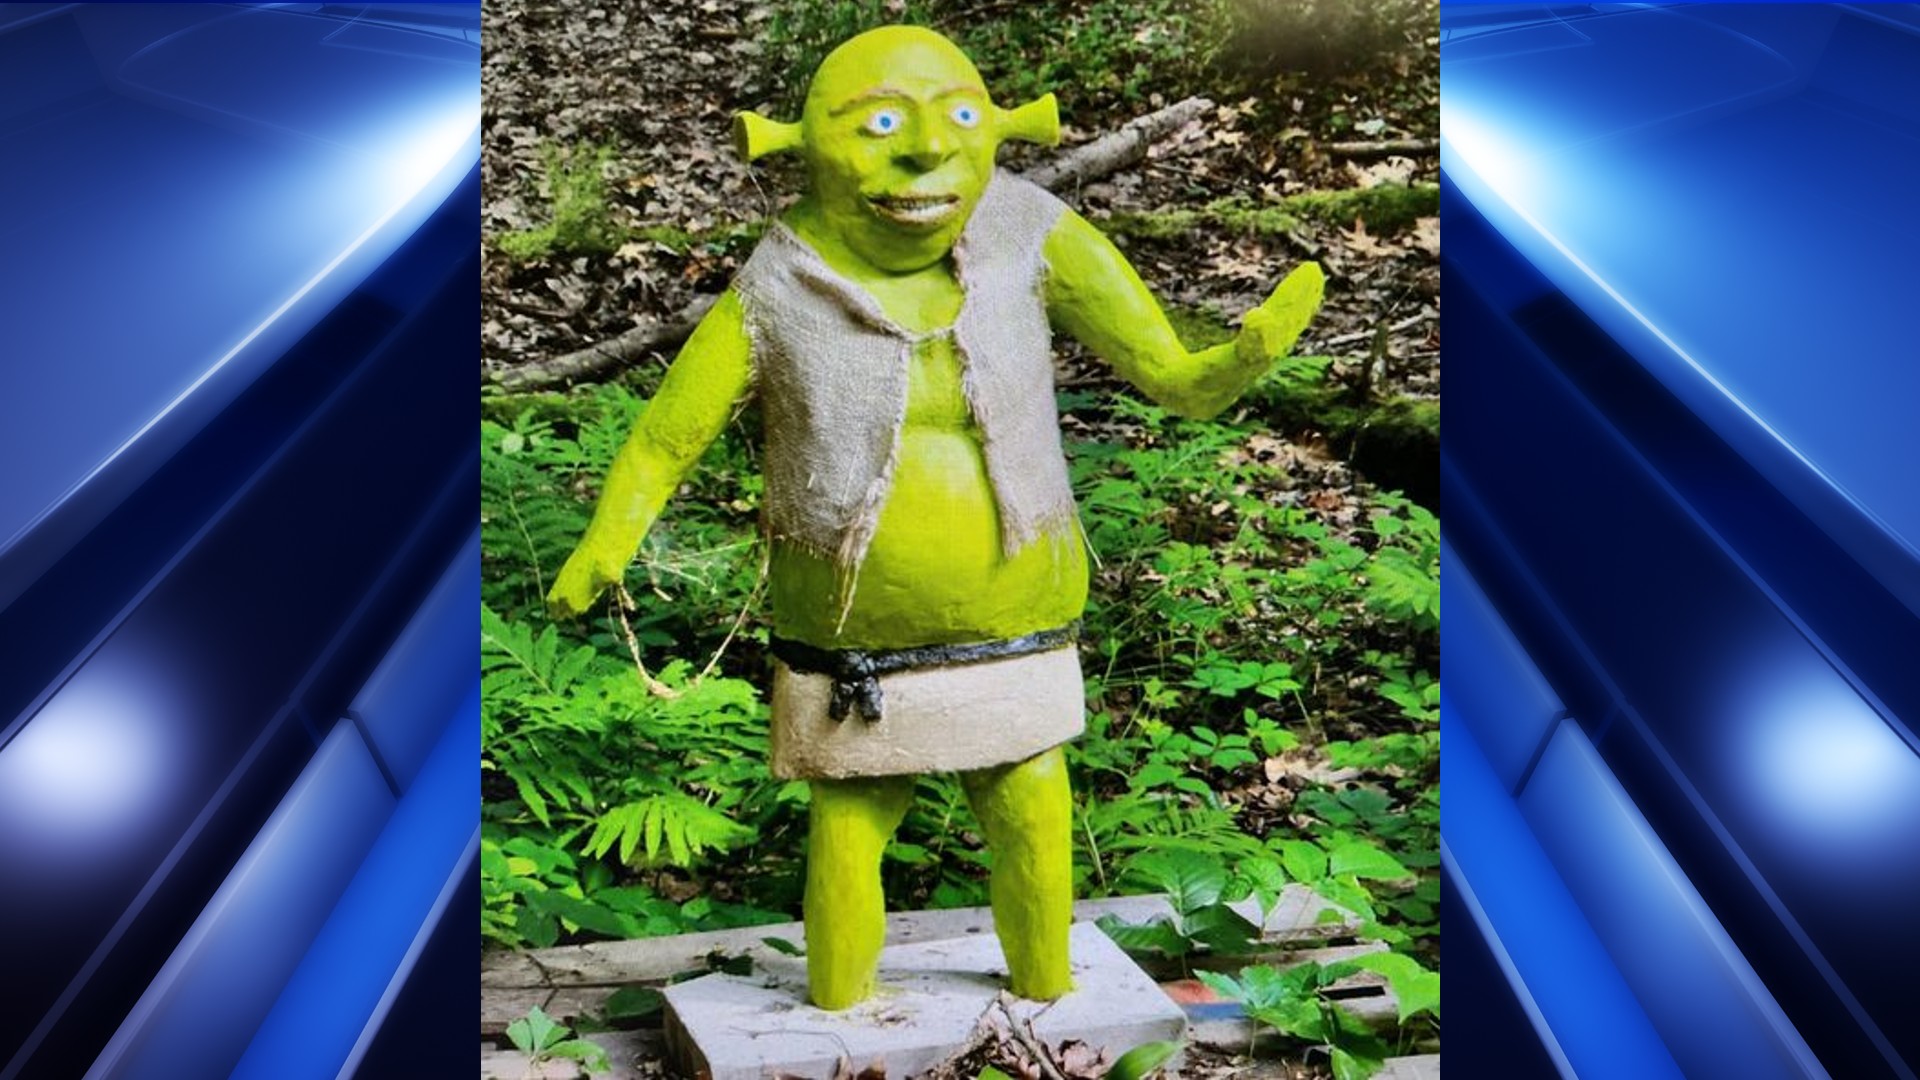 200 Pound Shrek Sculpture Missing From Hatfield Home